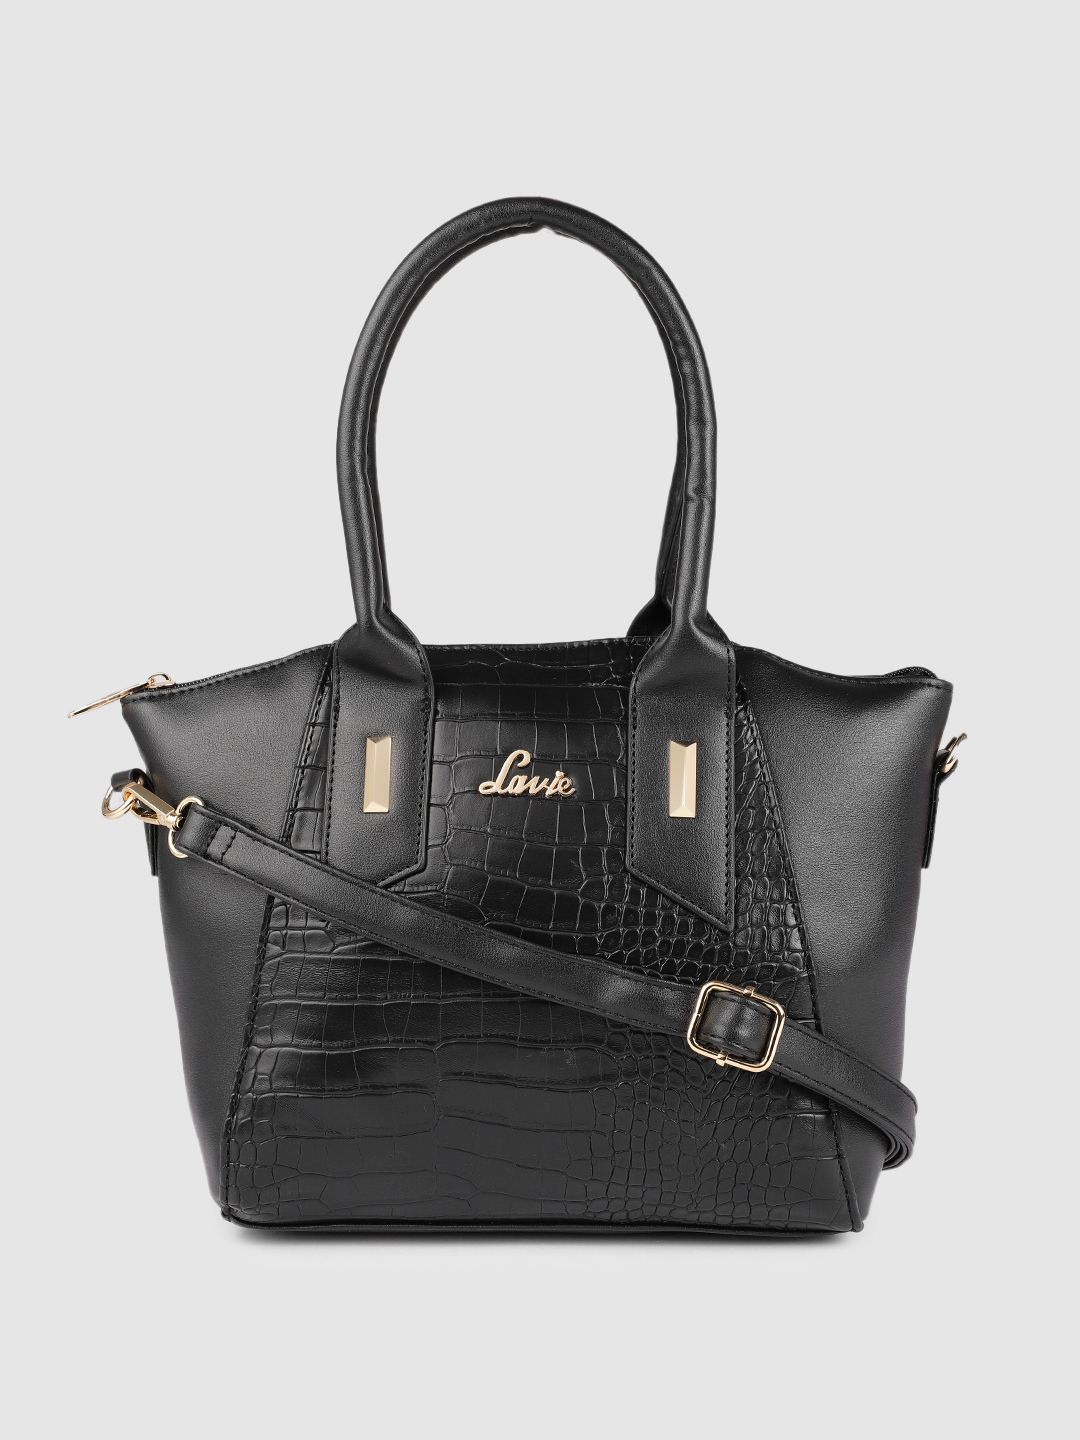 Lavie Black Animal Textured Structured Handheld Bag Price in India